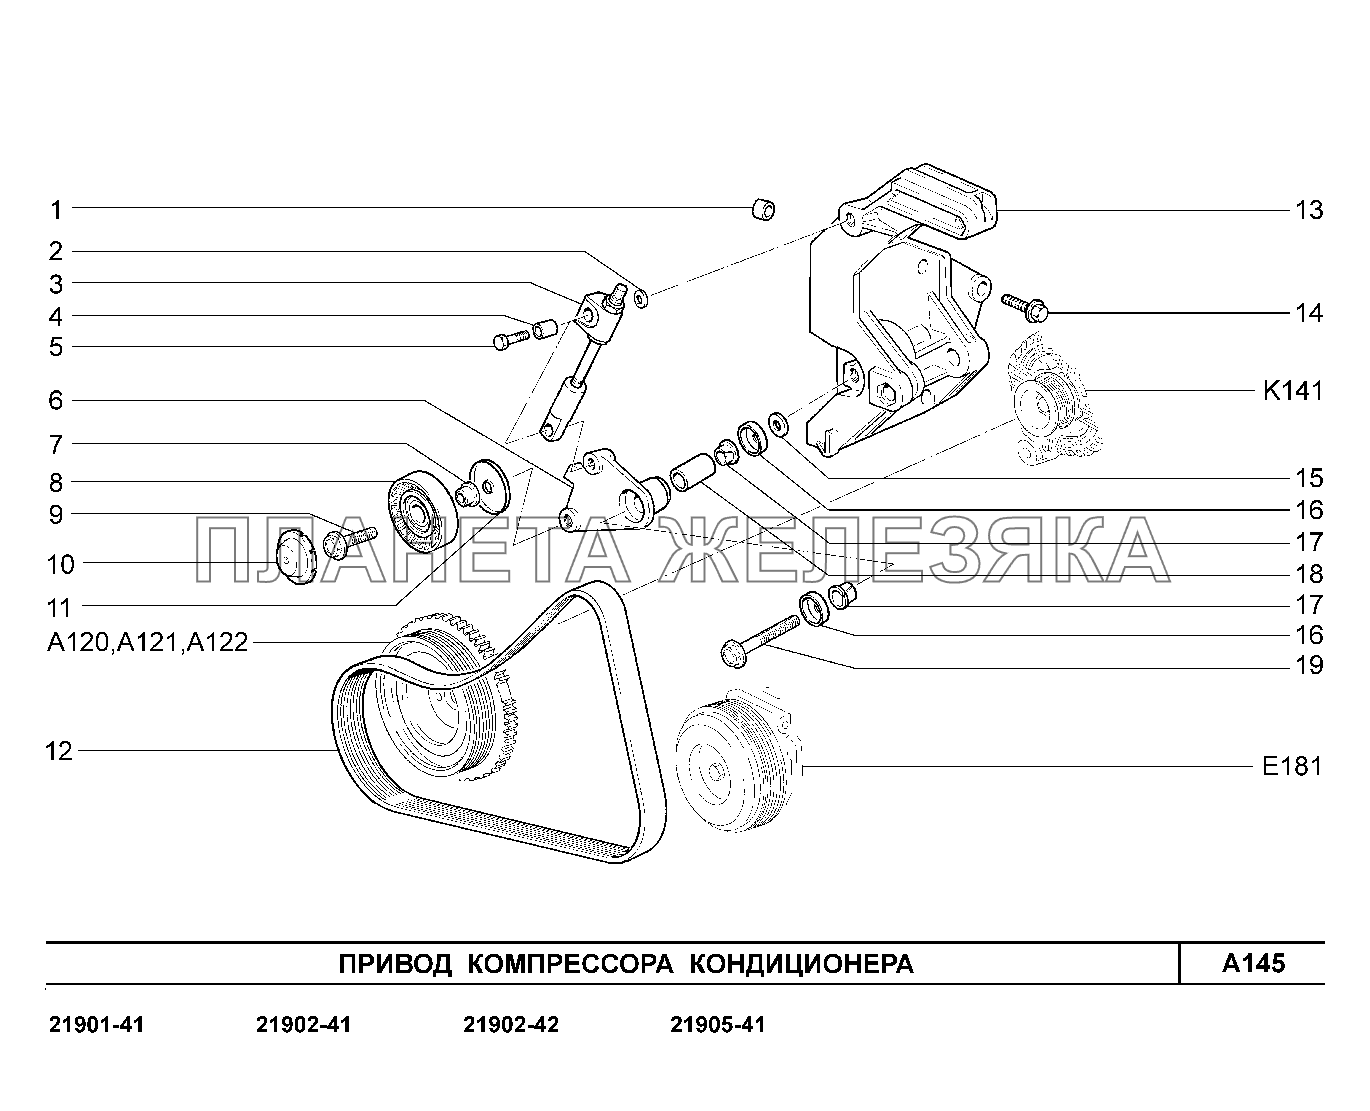 A145. Привод компрессора кондиционера Lada Granta-2190